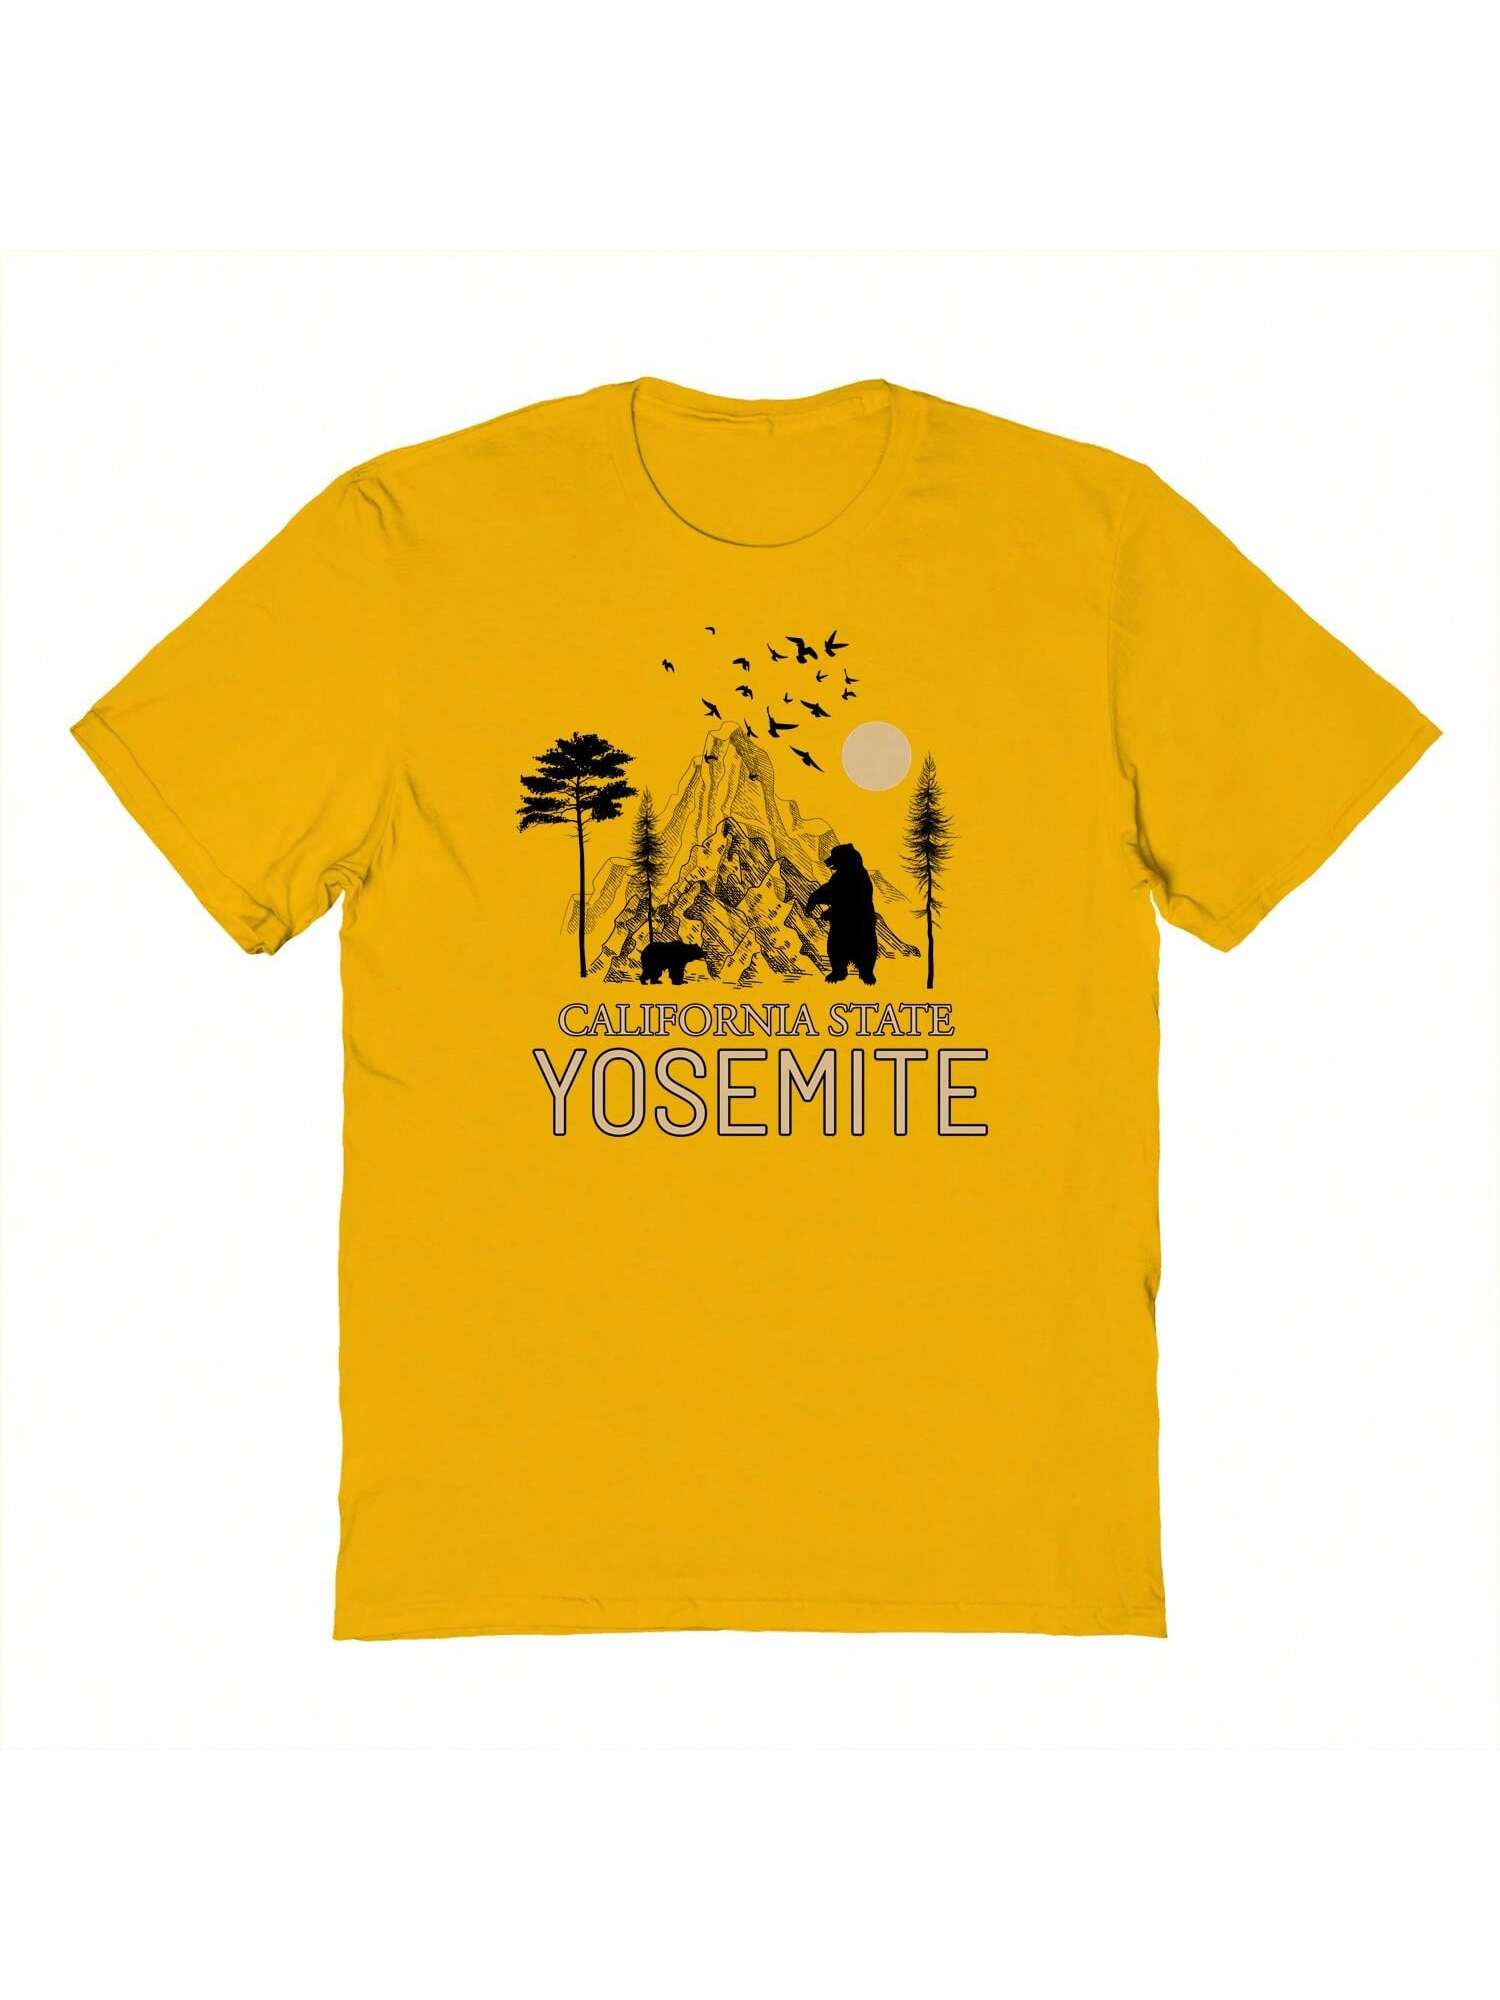 Мужская хлопковая футболка с короткими рукавами Country Parks California State Yose Mite Graphic Sand, золото sublimox oxalic acid sublimator beekeeping varroa mite 110v